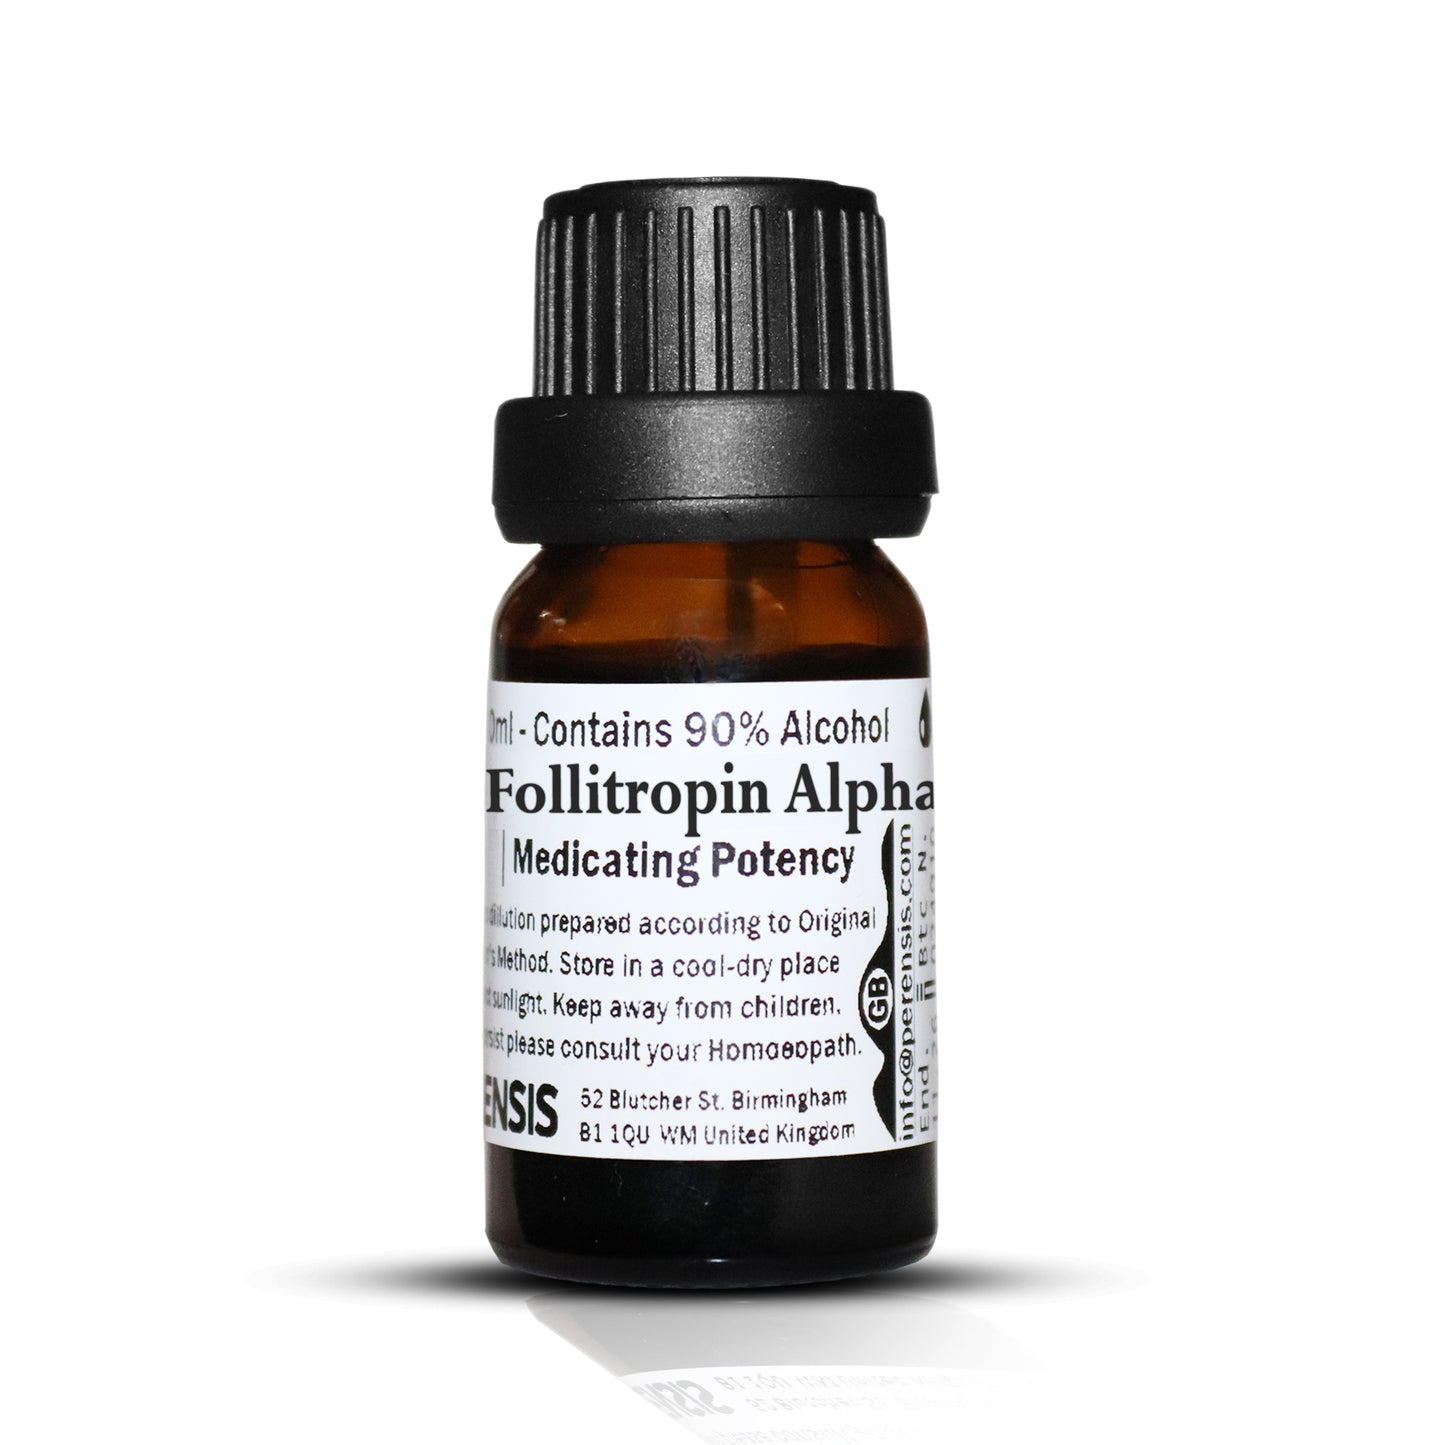 Follitropin Alpha